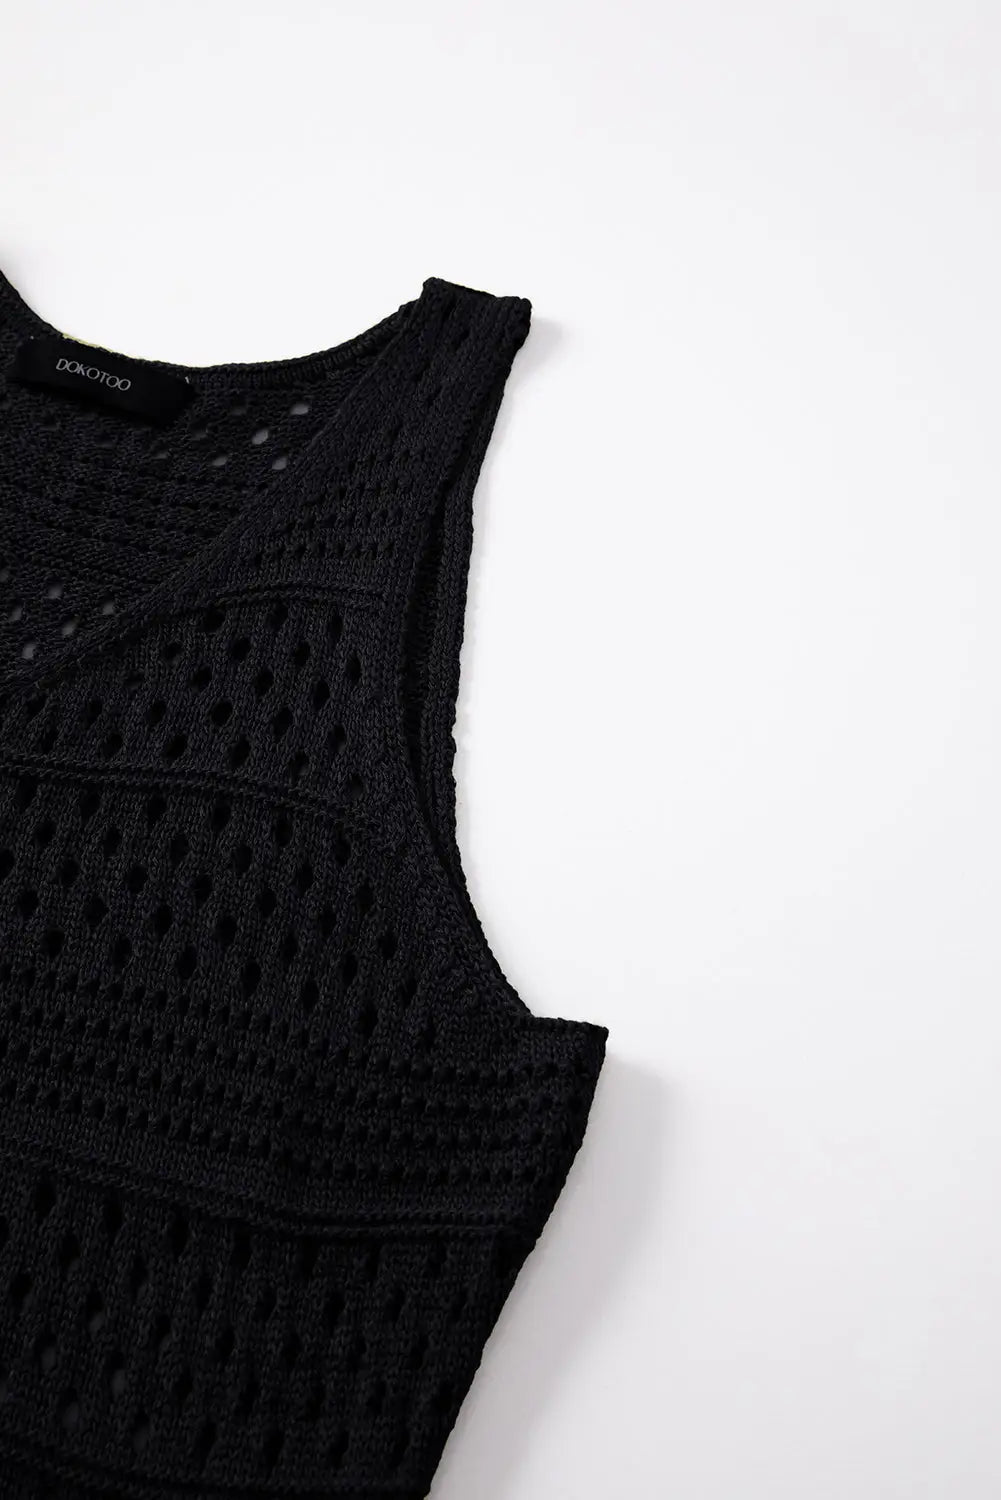 Crochet cover up dress with slits - swimwear